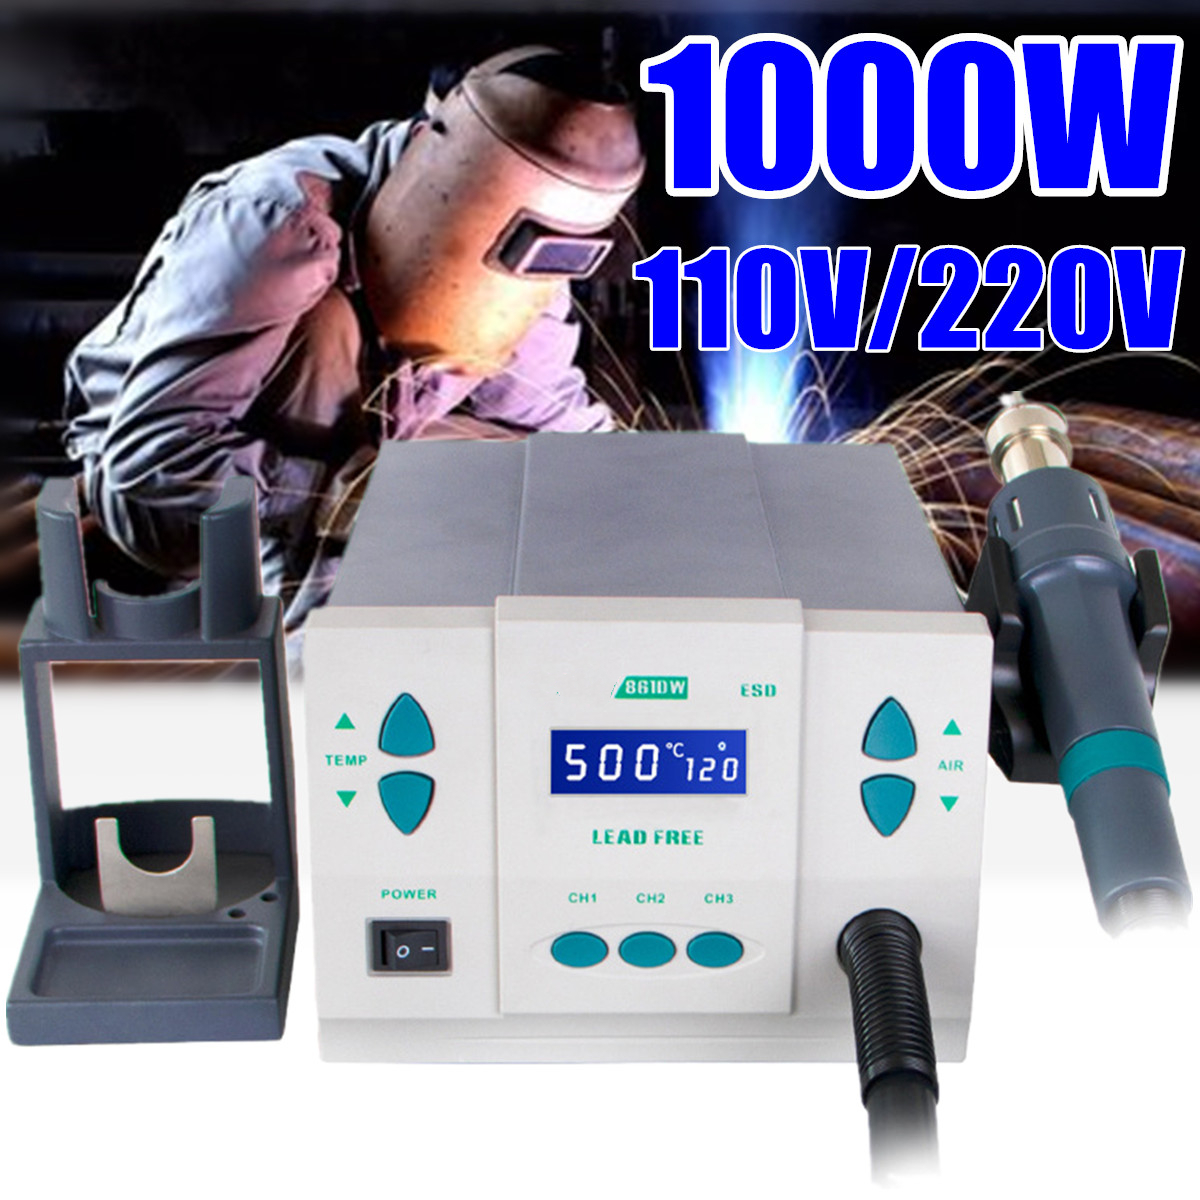 1000W-High-Power-Hot-A-ir-Soldering-Rework-Station-w3-Nozzles-220V-110V-Solder-Stations-1606089-1